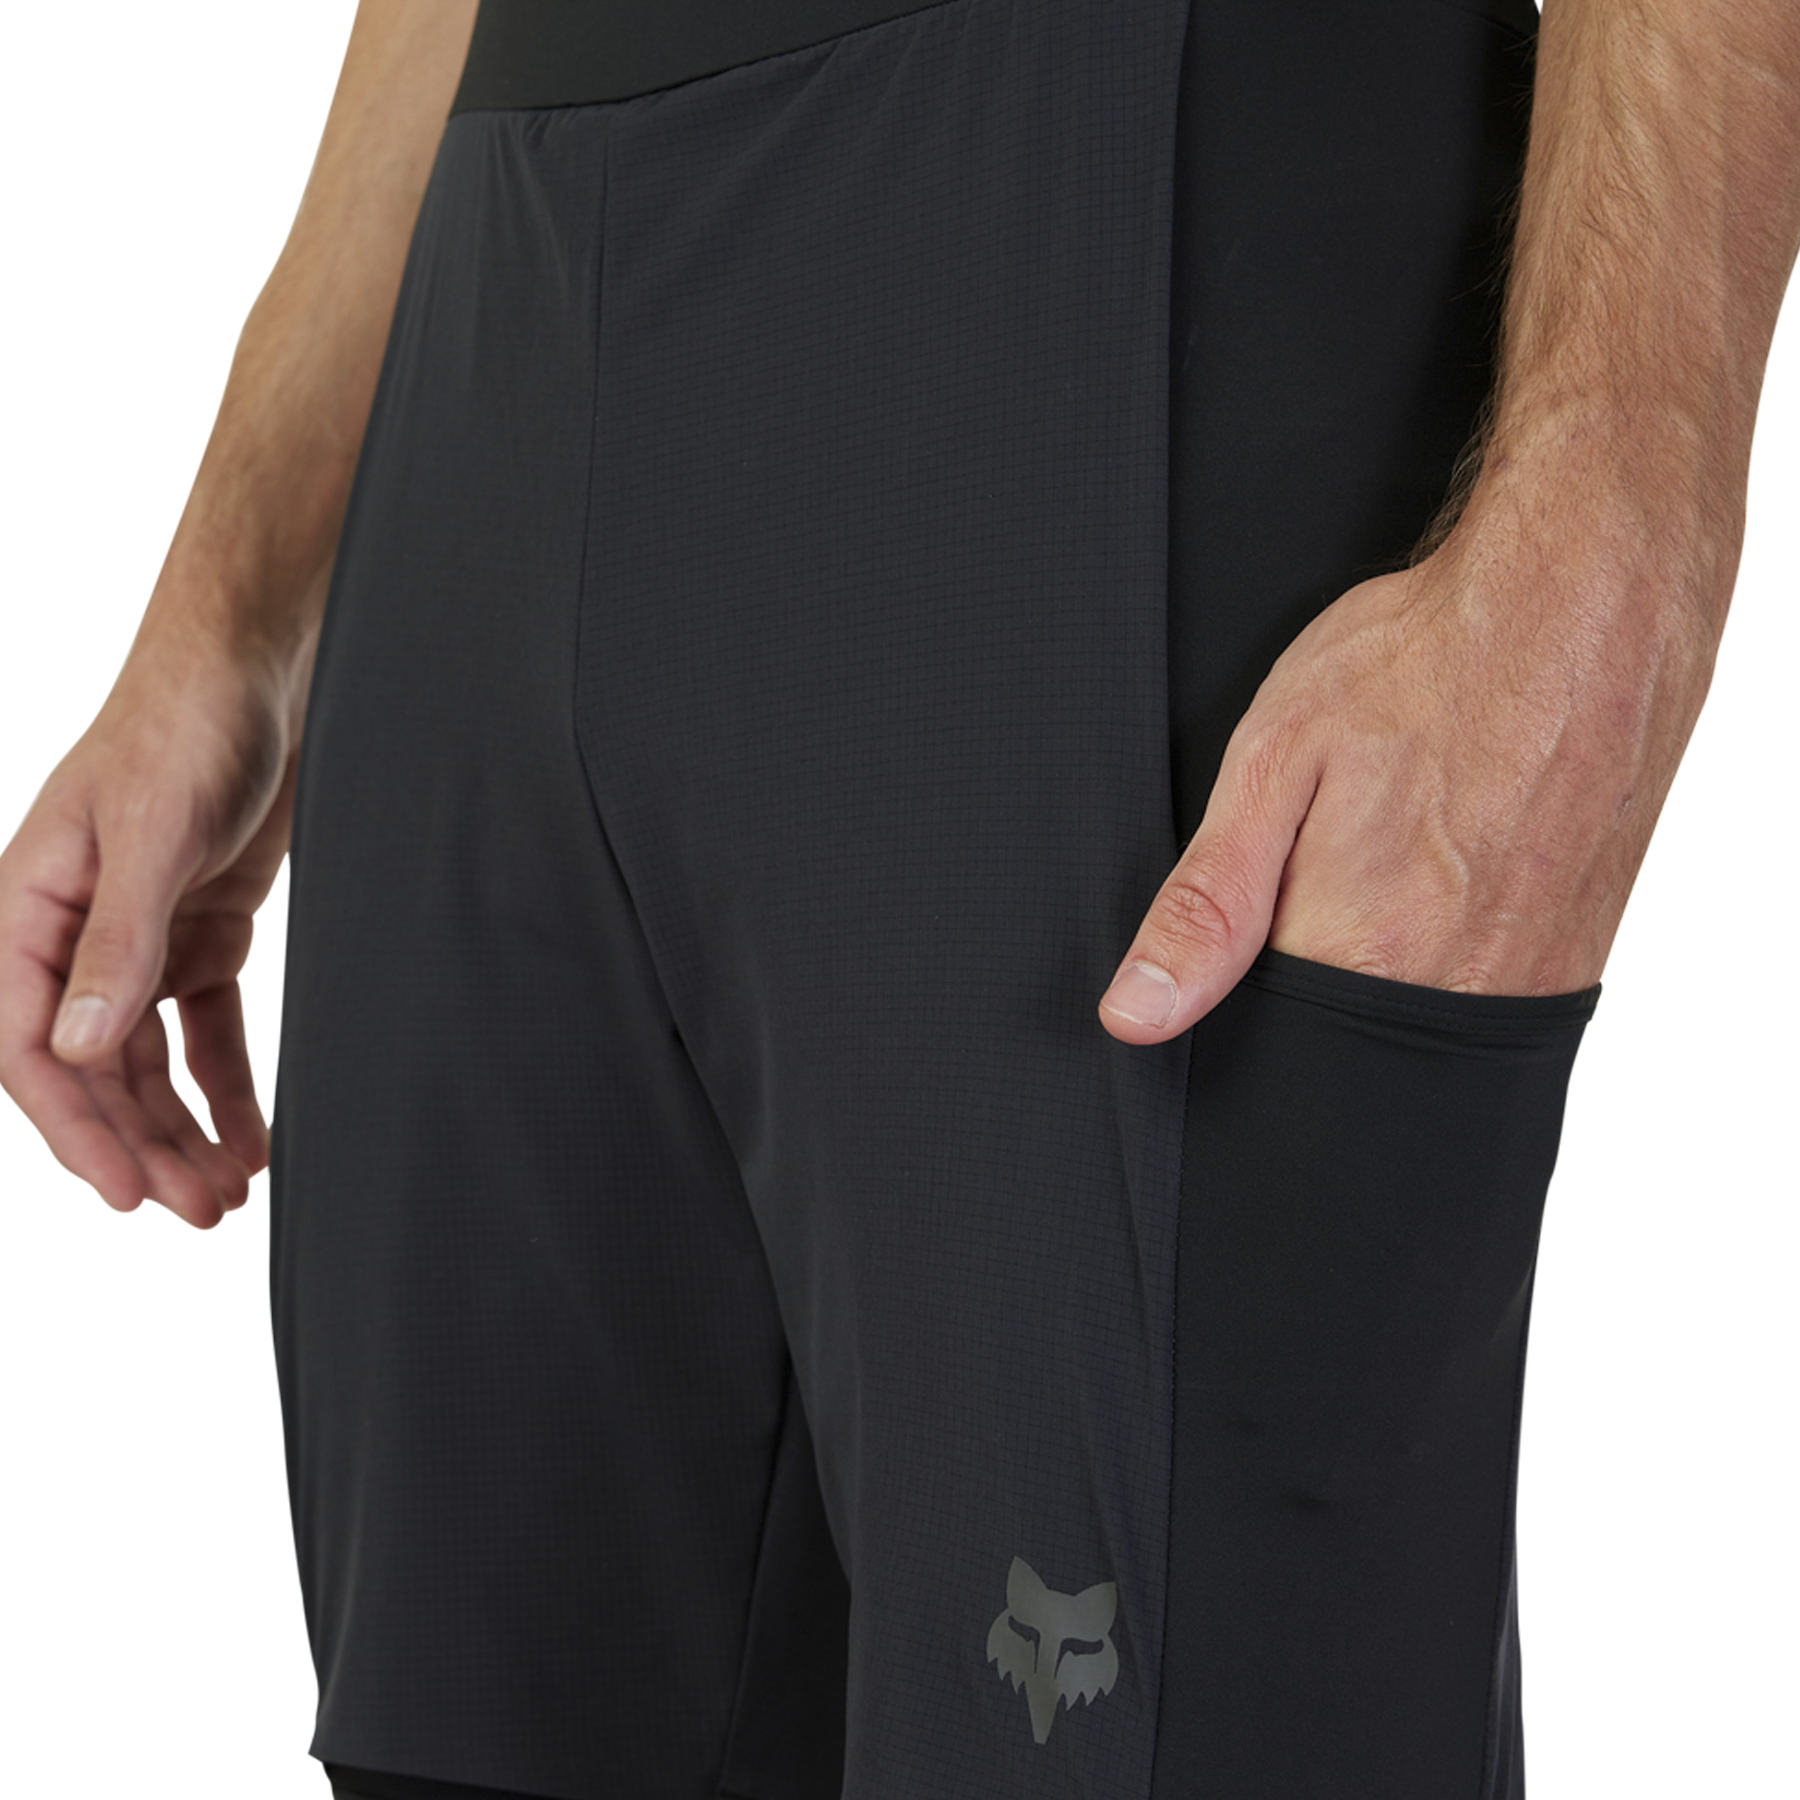 Fox Flexair Ascent Bib Shorts - XL - Black - Image 3